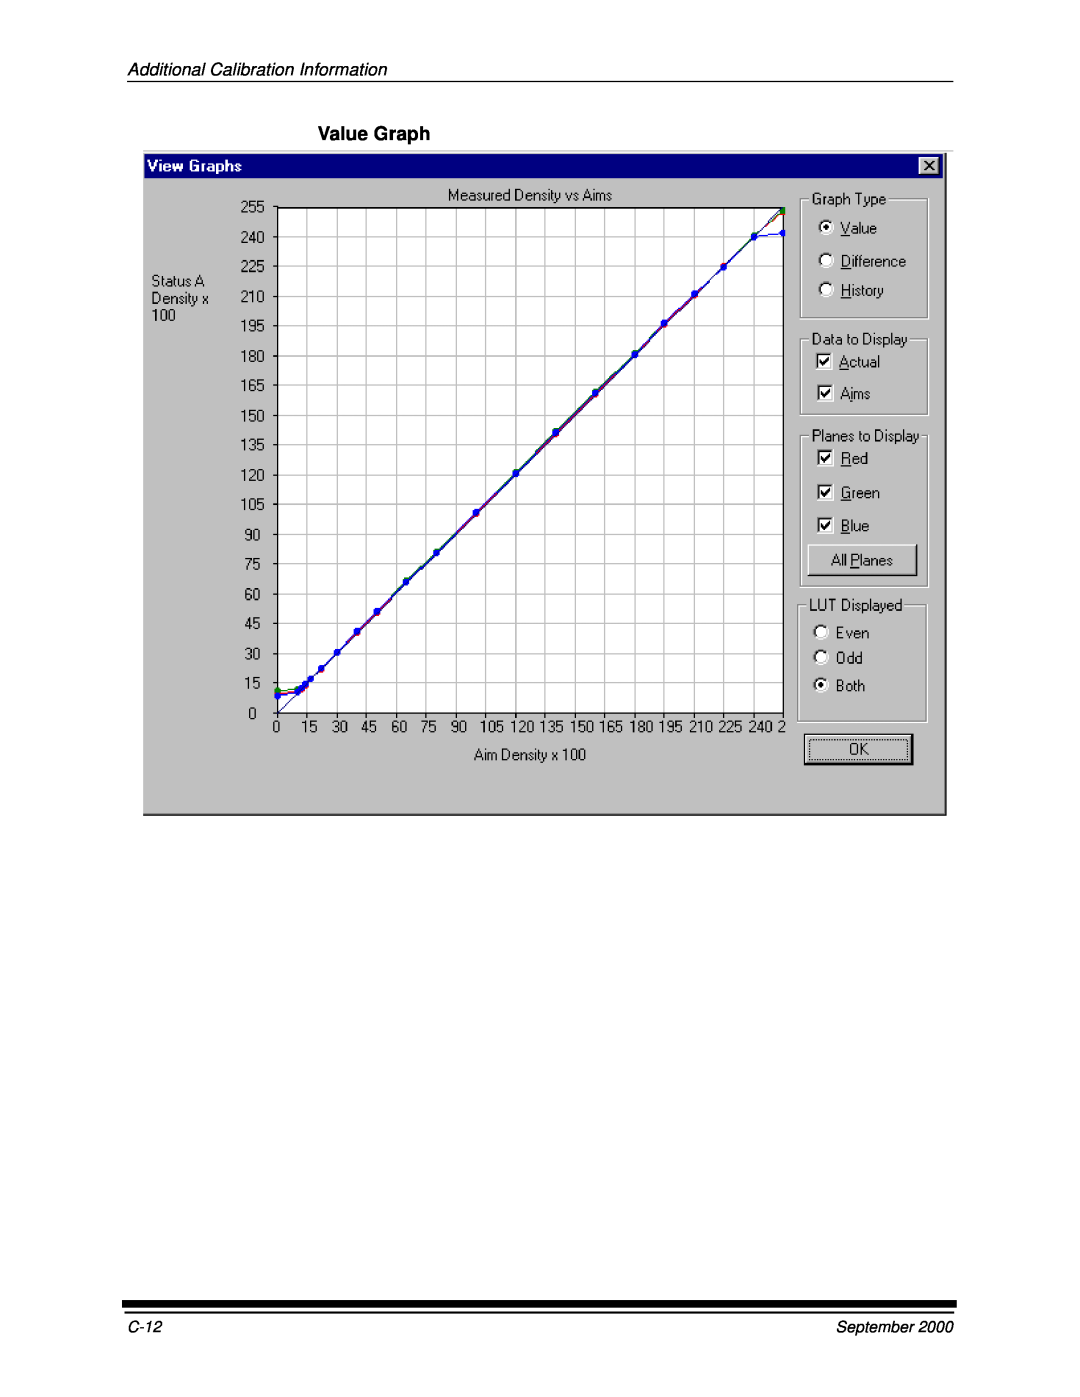 Kodak 20R manual Value Graph, Additional Calibration Information, C-12, September 